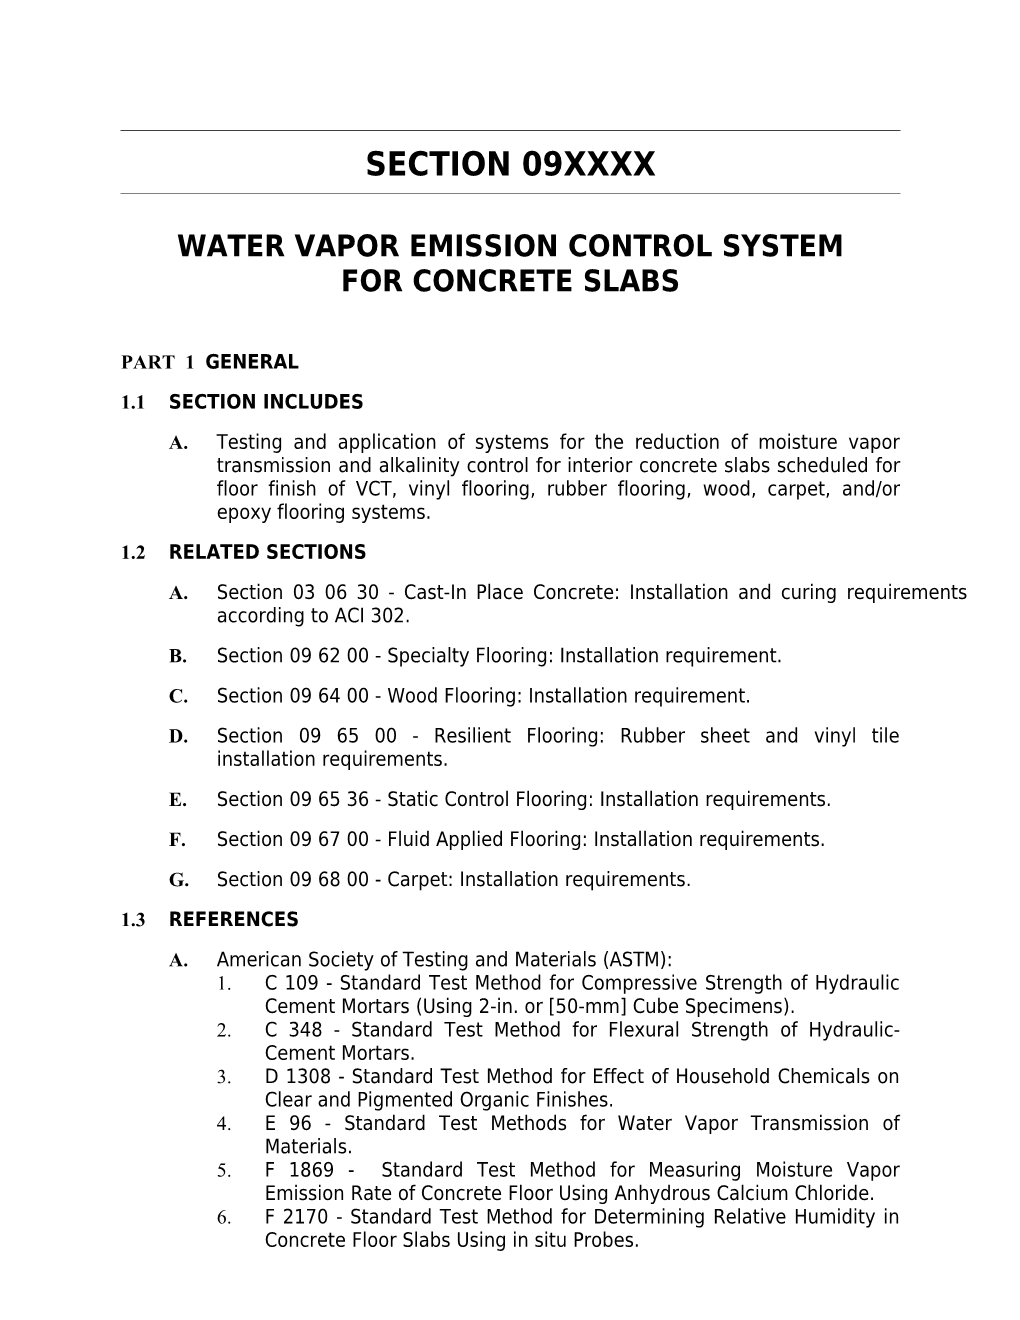 Water Vapor Emission Control System